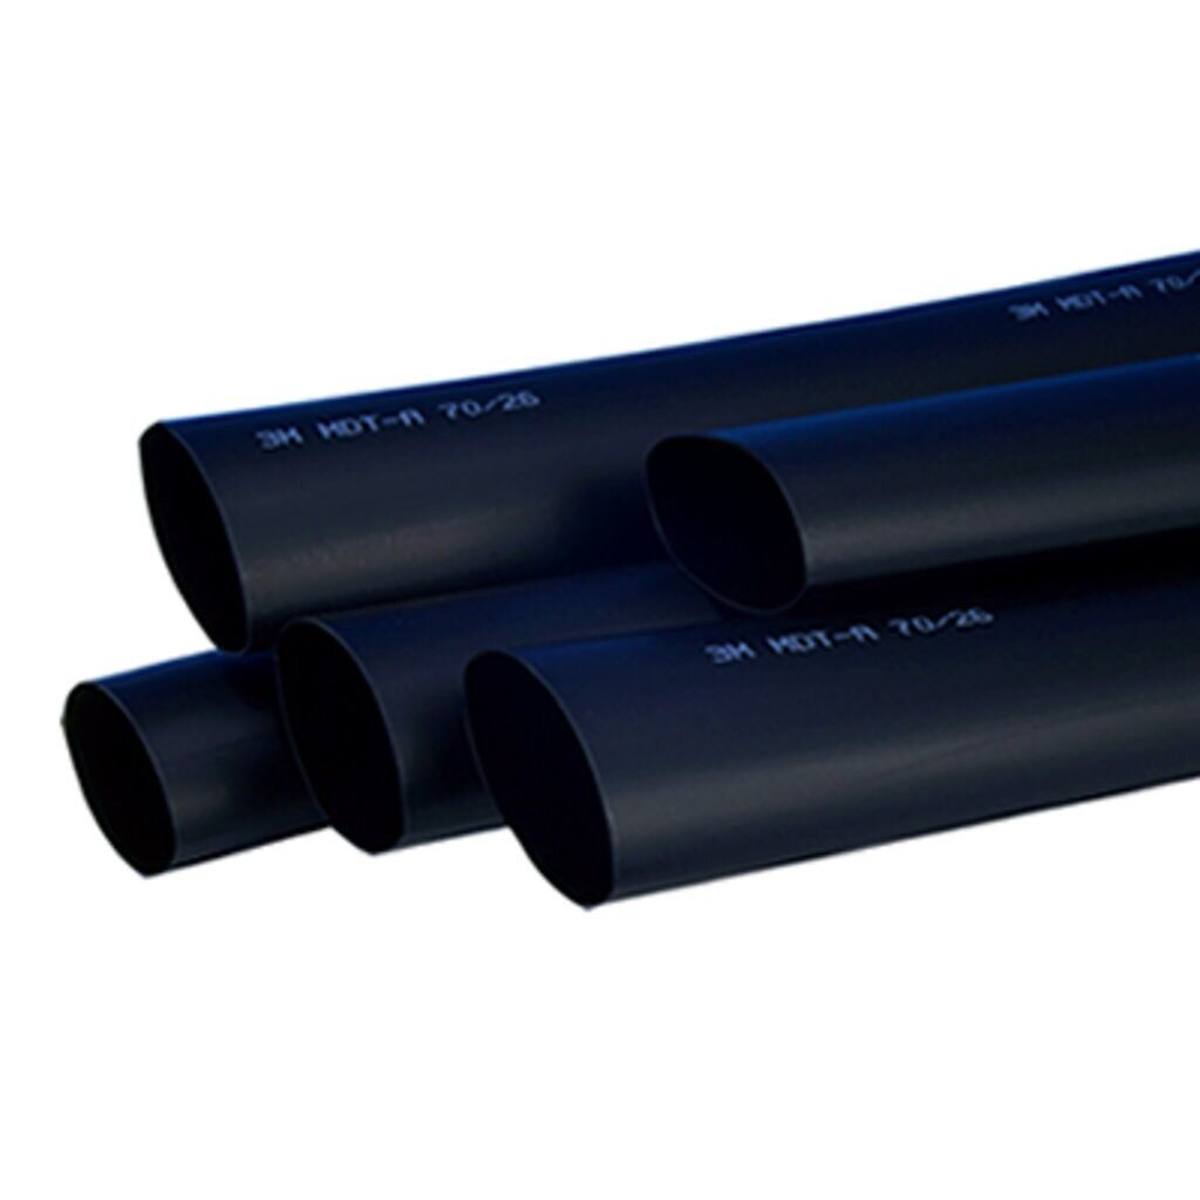 3M MDT-A Medium-wall heat-shrink tubing with adhesive, black, 50/18 mm, 1 m